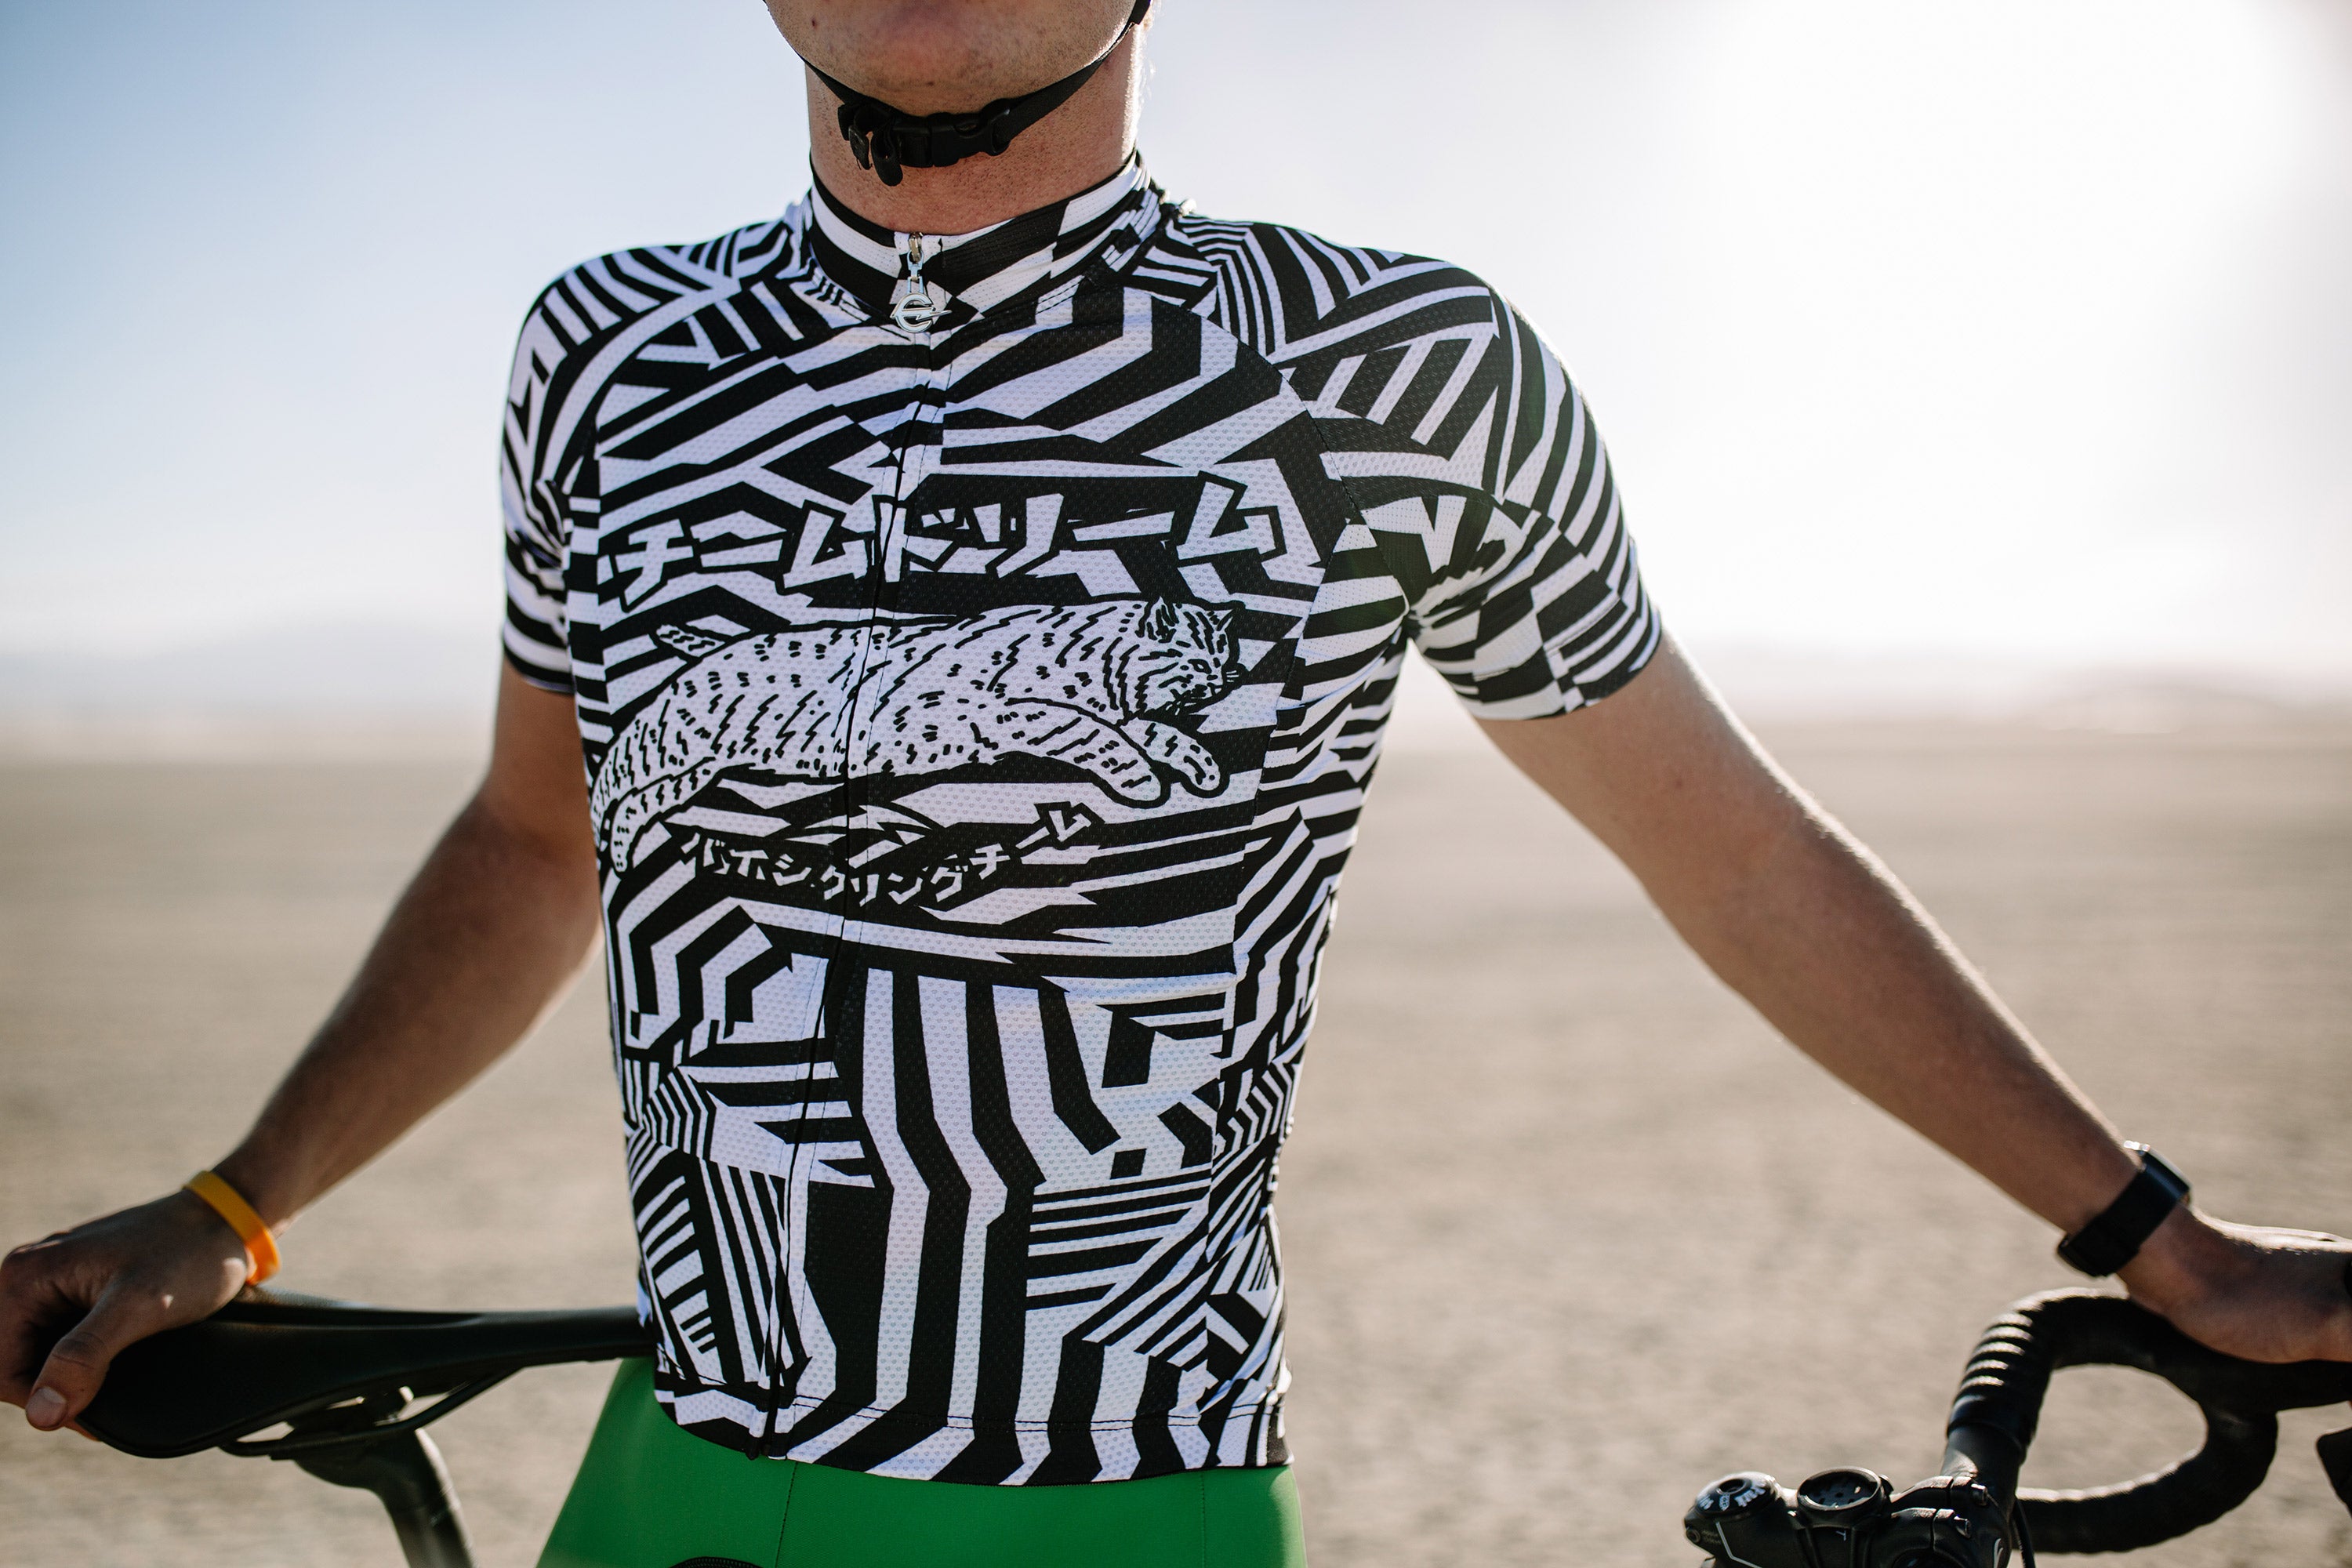 team dream cycling apparel